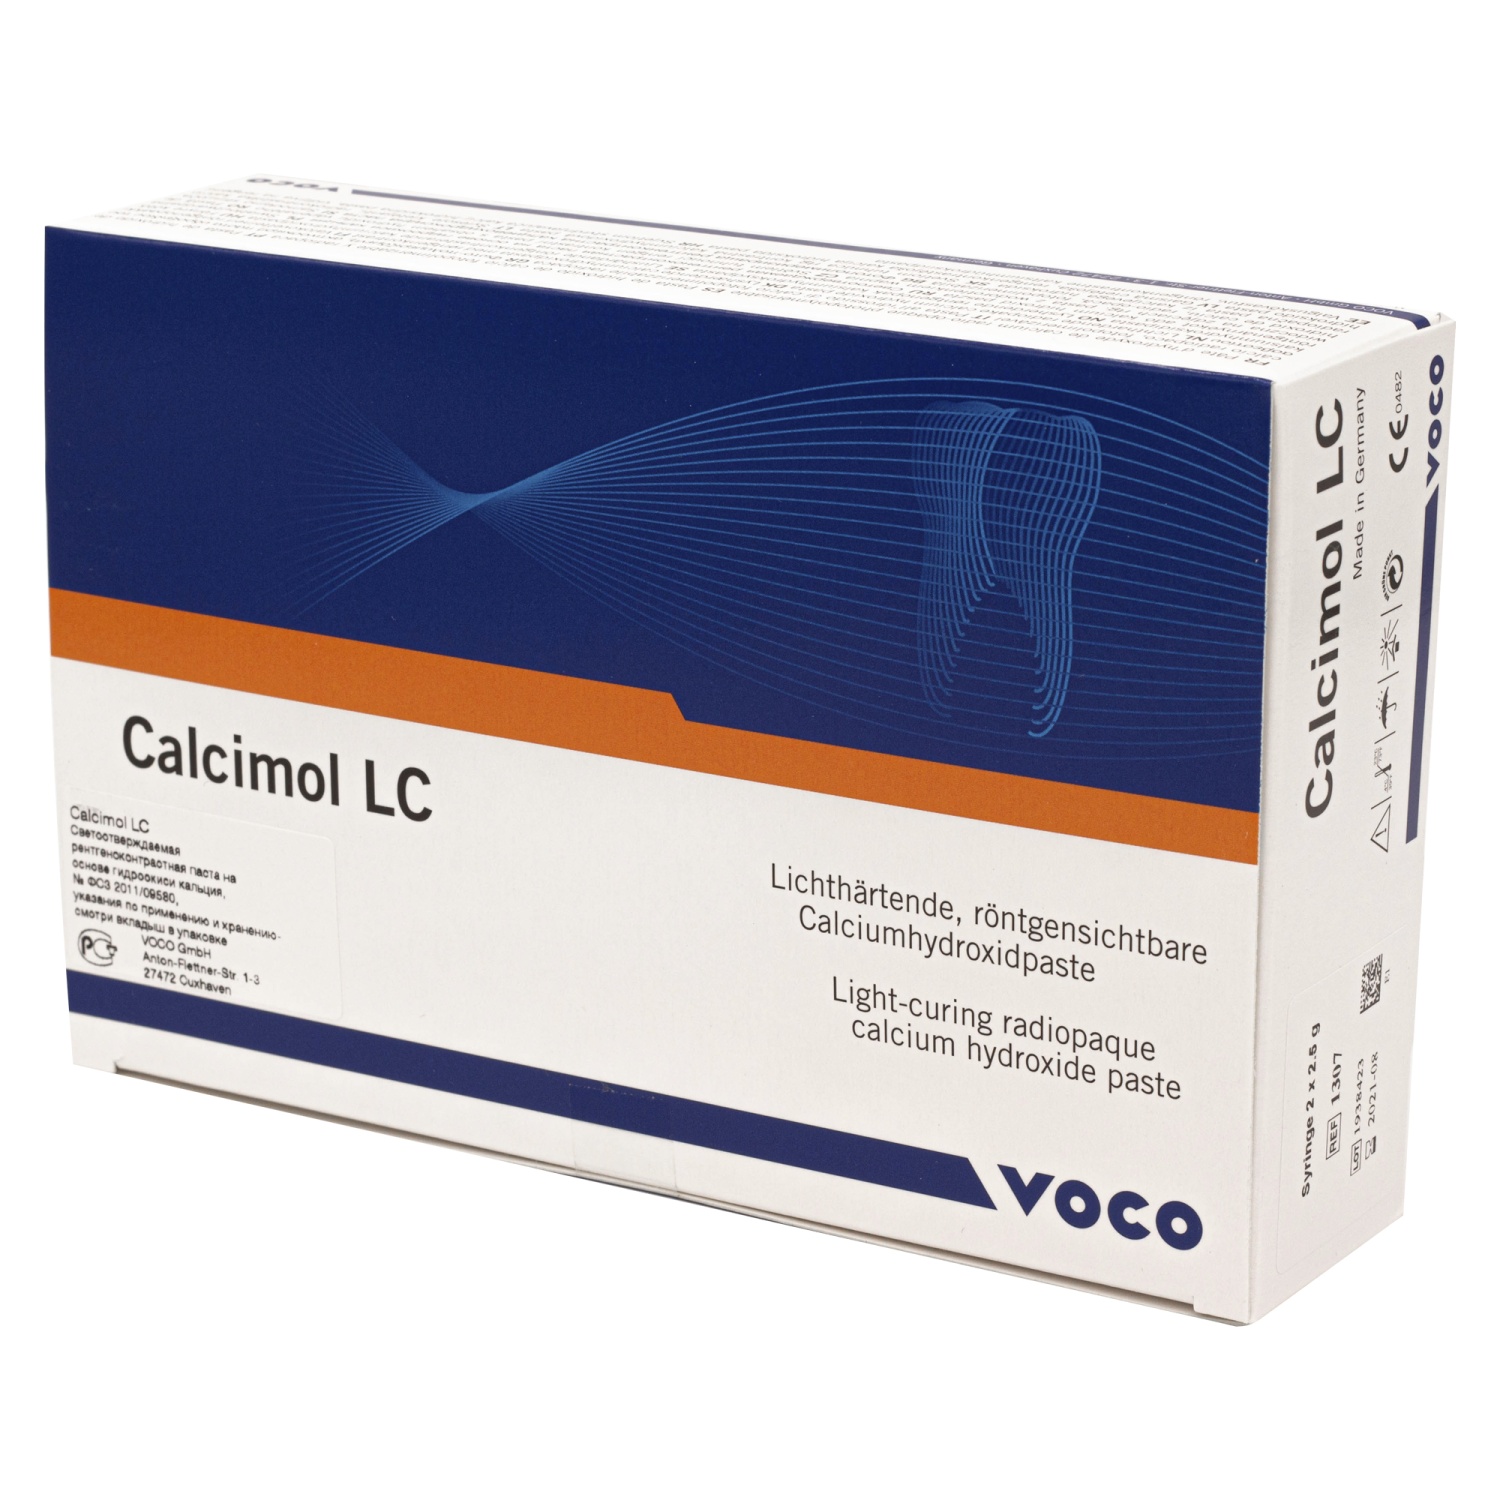 Кальцимол ЛС / Calcimol LC шприц 2,5мл х 2шт VOCO 1307